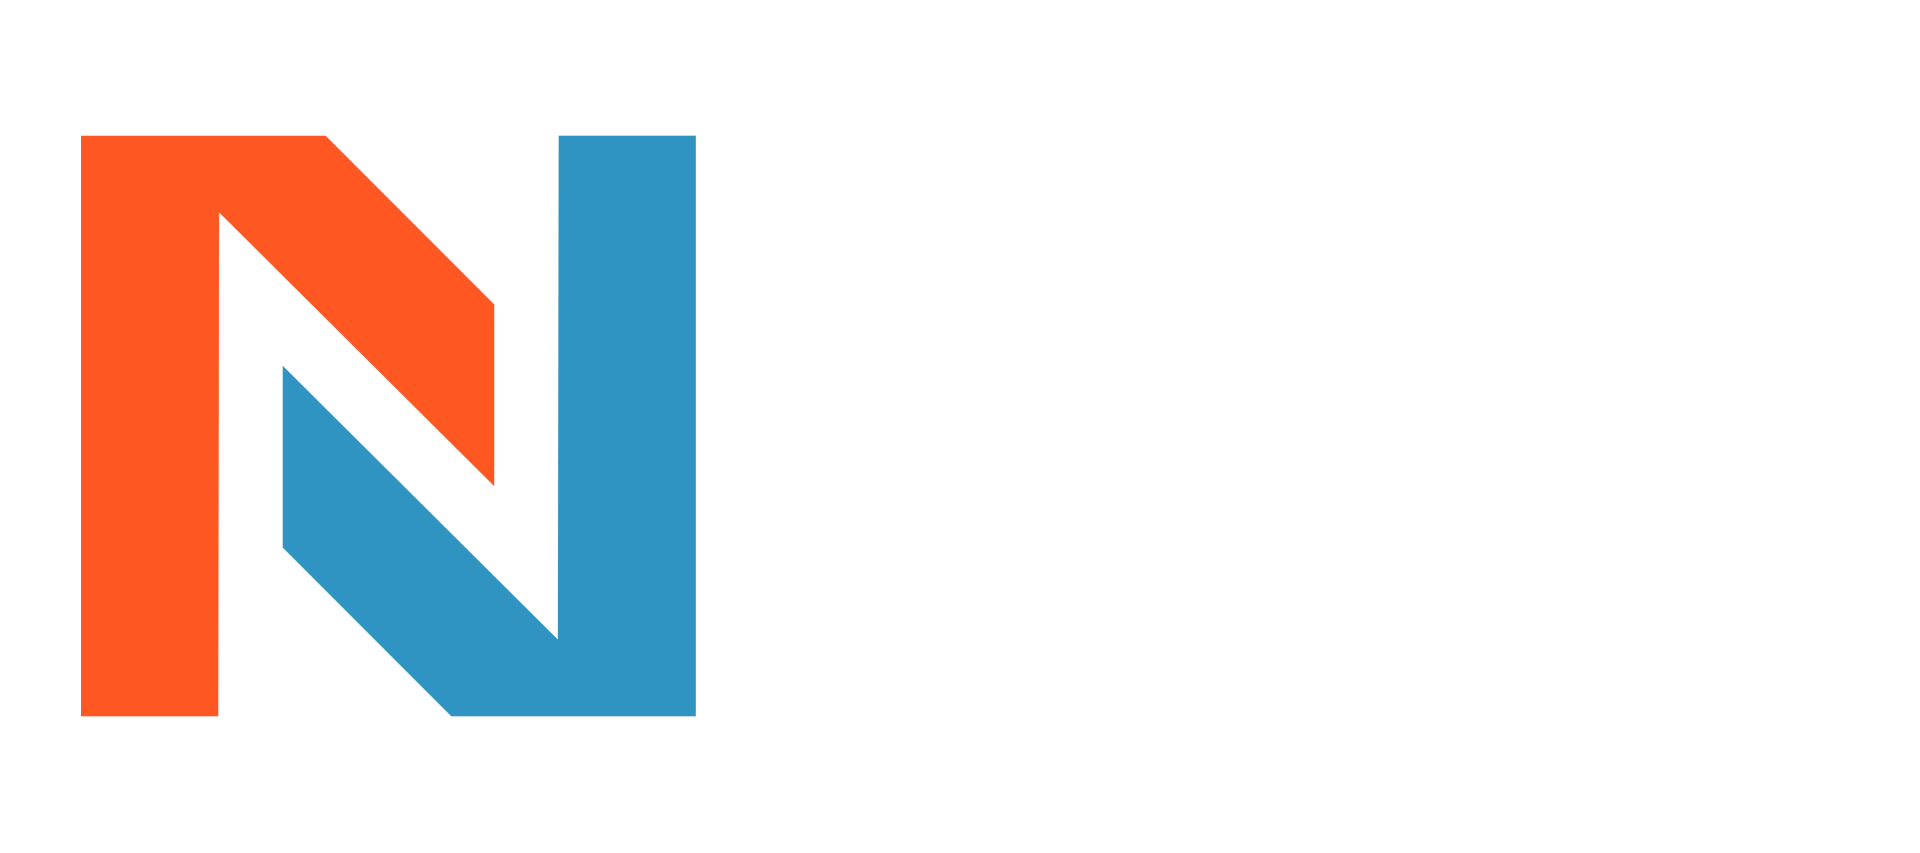 Nova vita health and safety